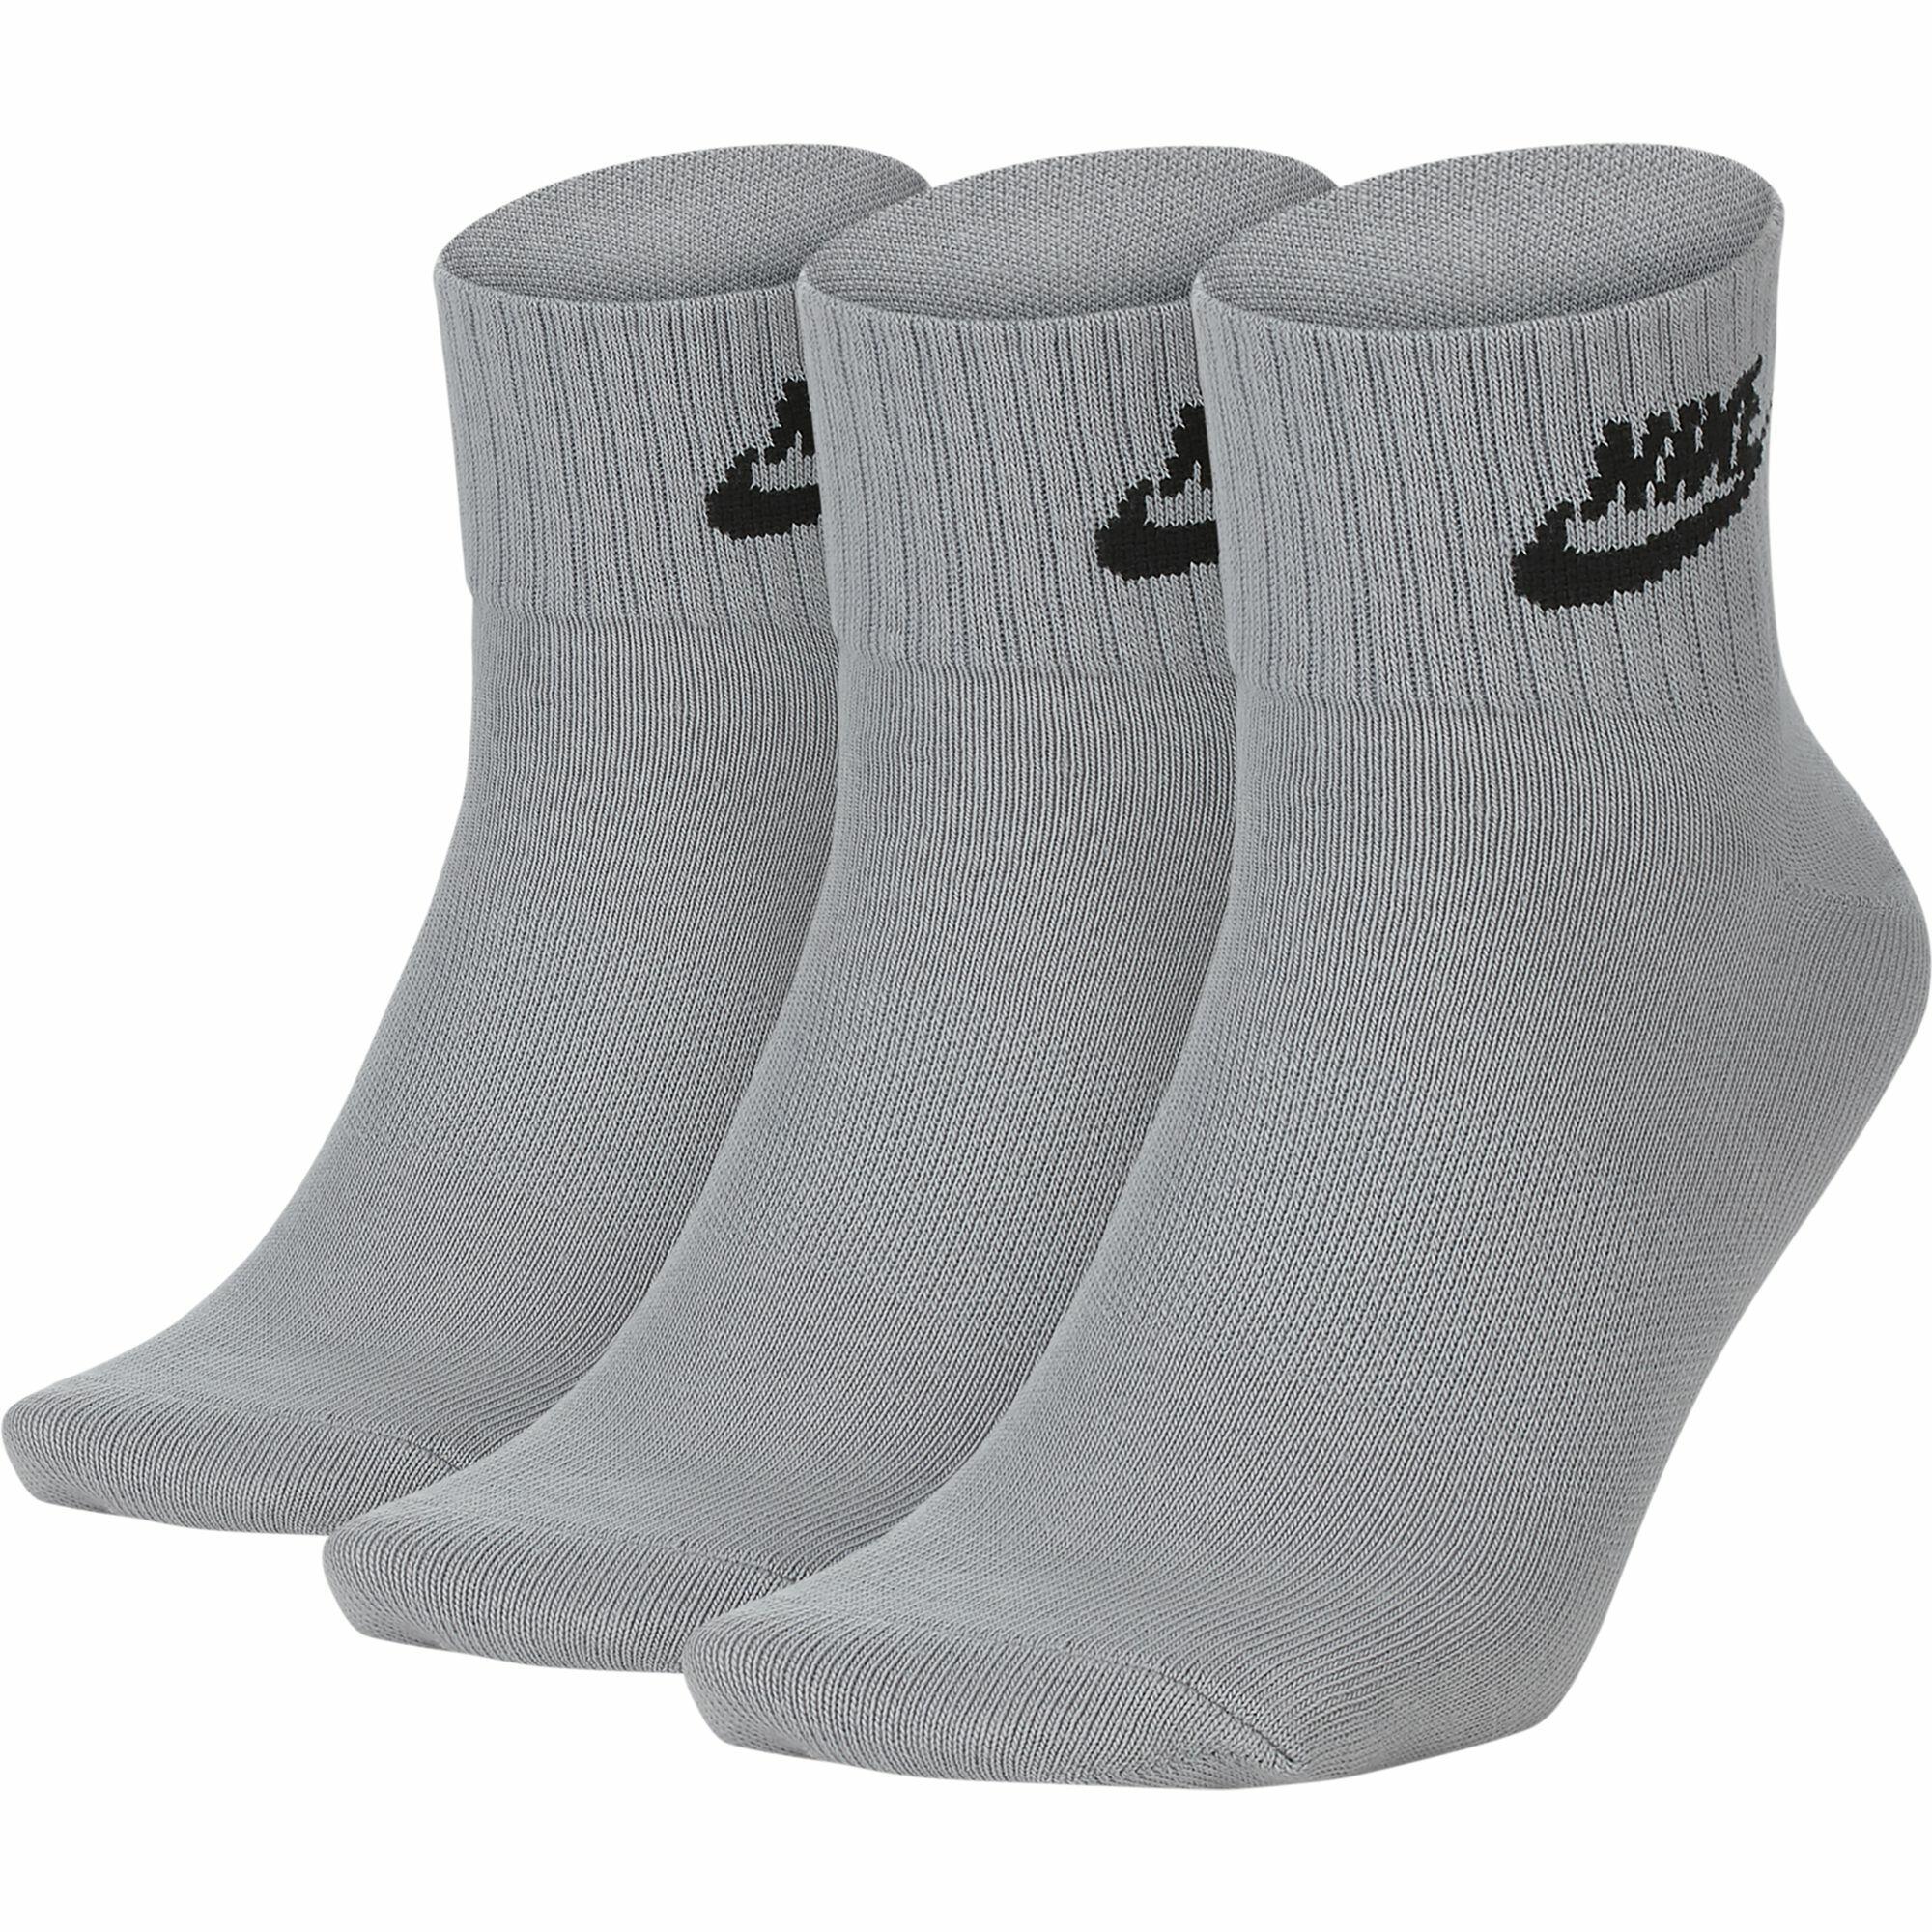 Nordstrom rack men's socks